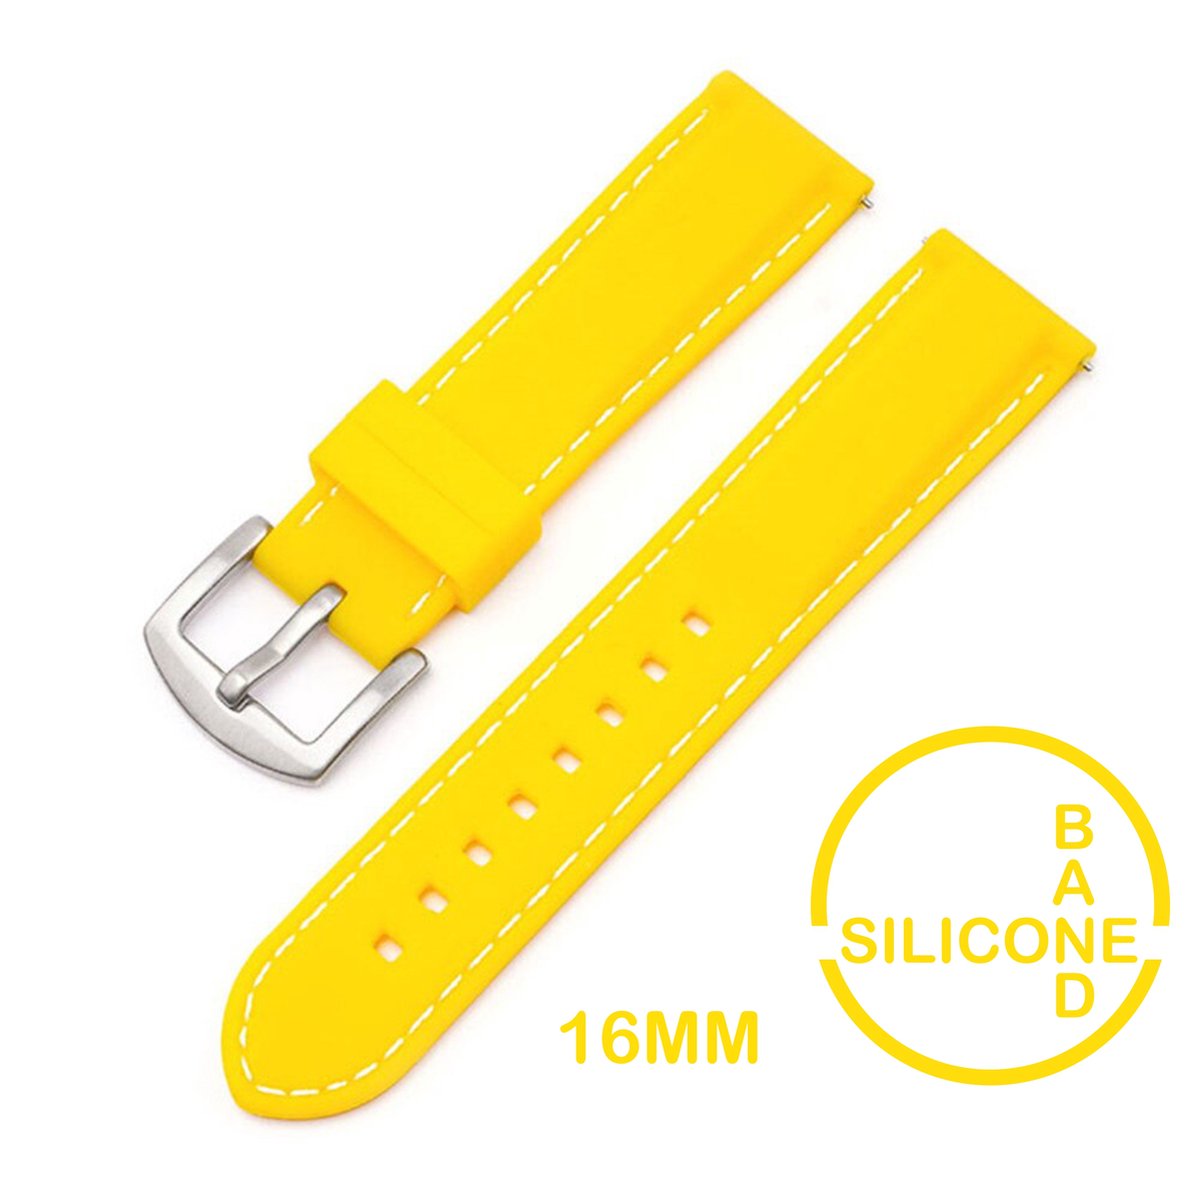 16mm Rubber Siliconen horlogeband Geel met Witte stiksels passend op o.a Casio Seiko Citizen en alle andere merken - 16 mm Bandje - Horlogebandje horlogeband